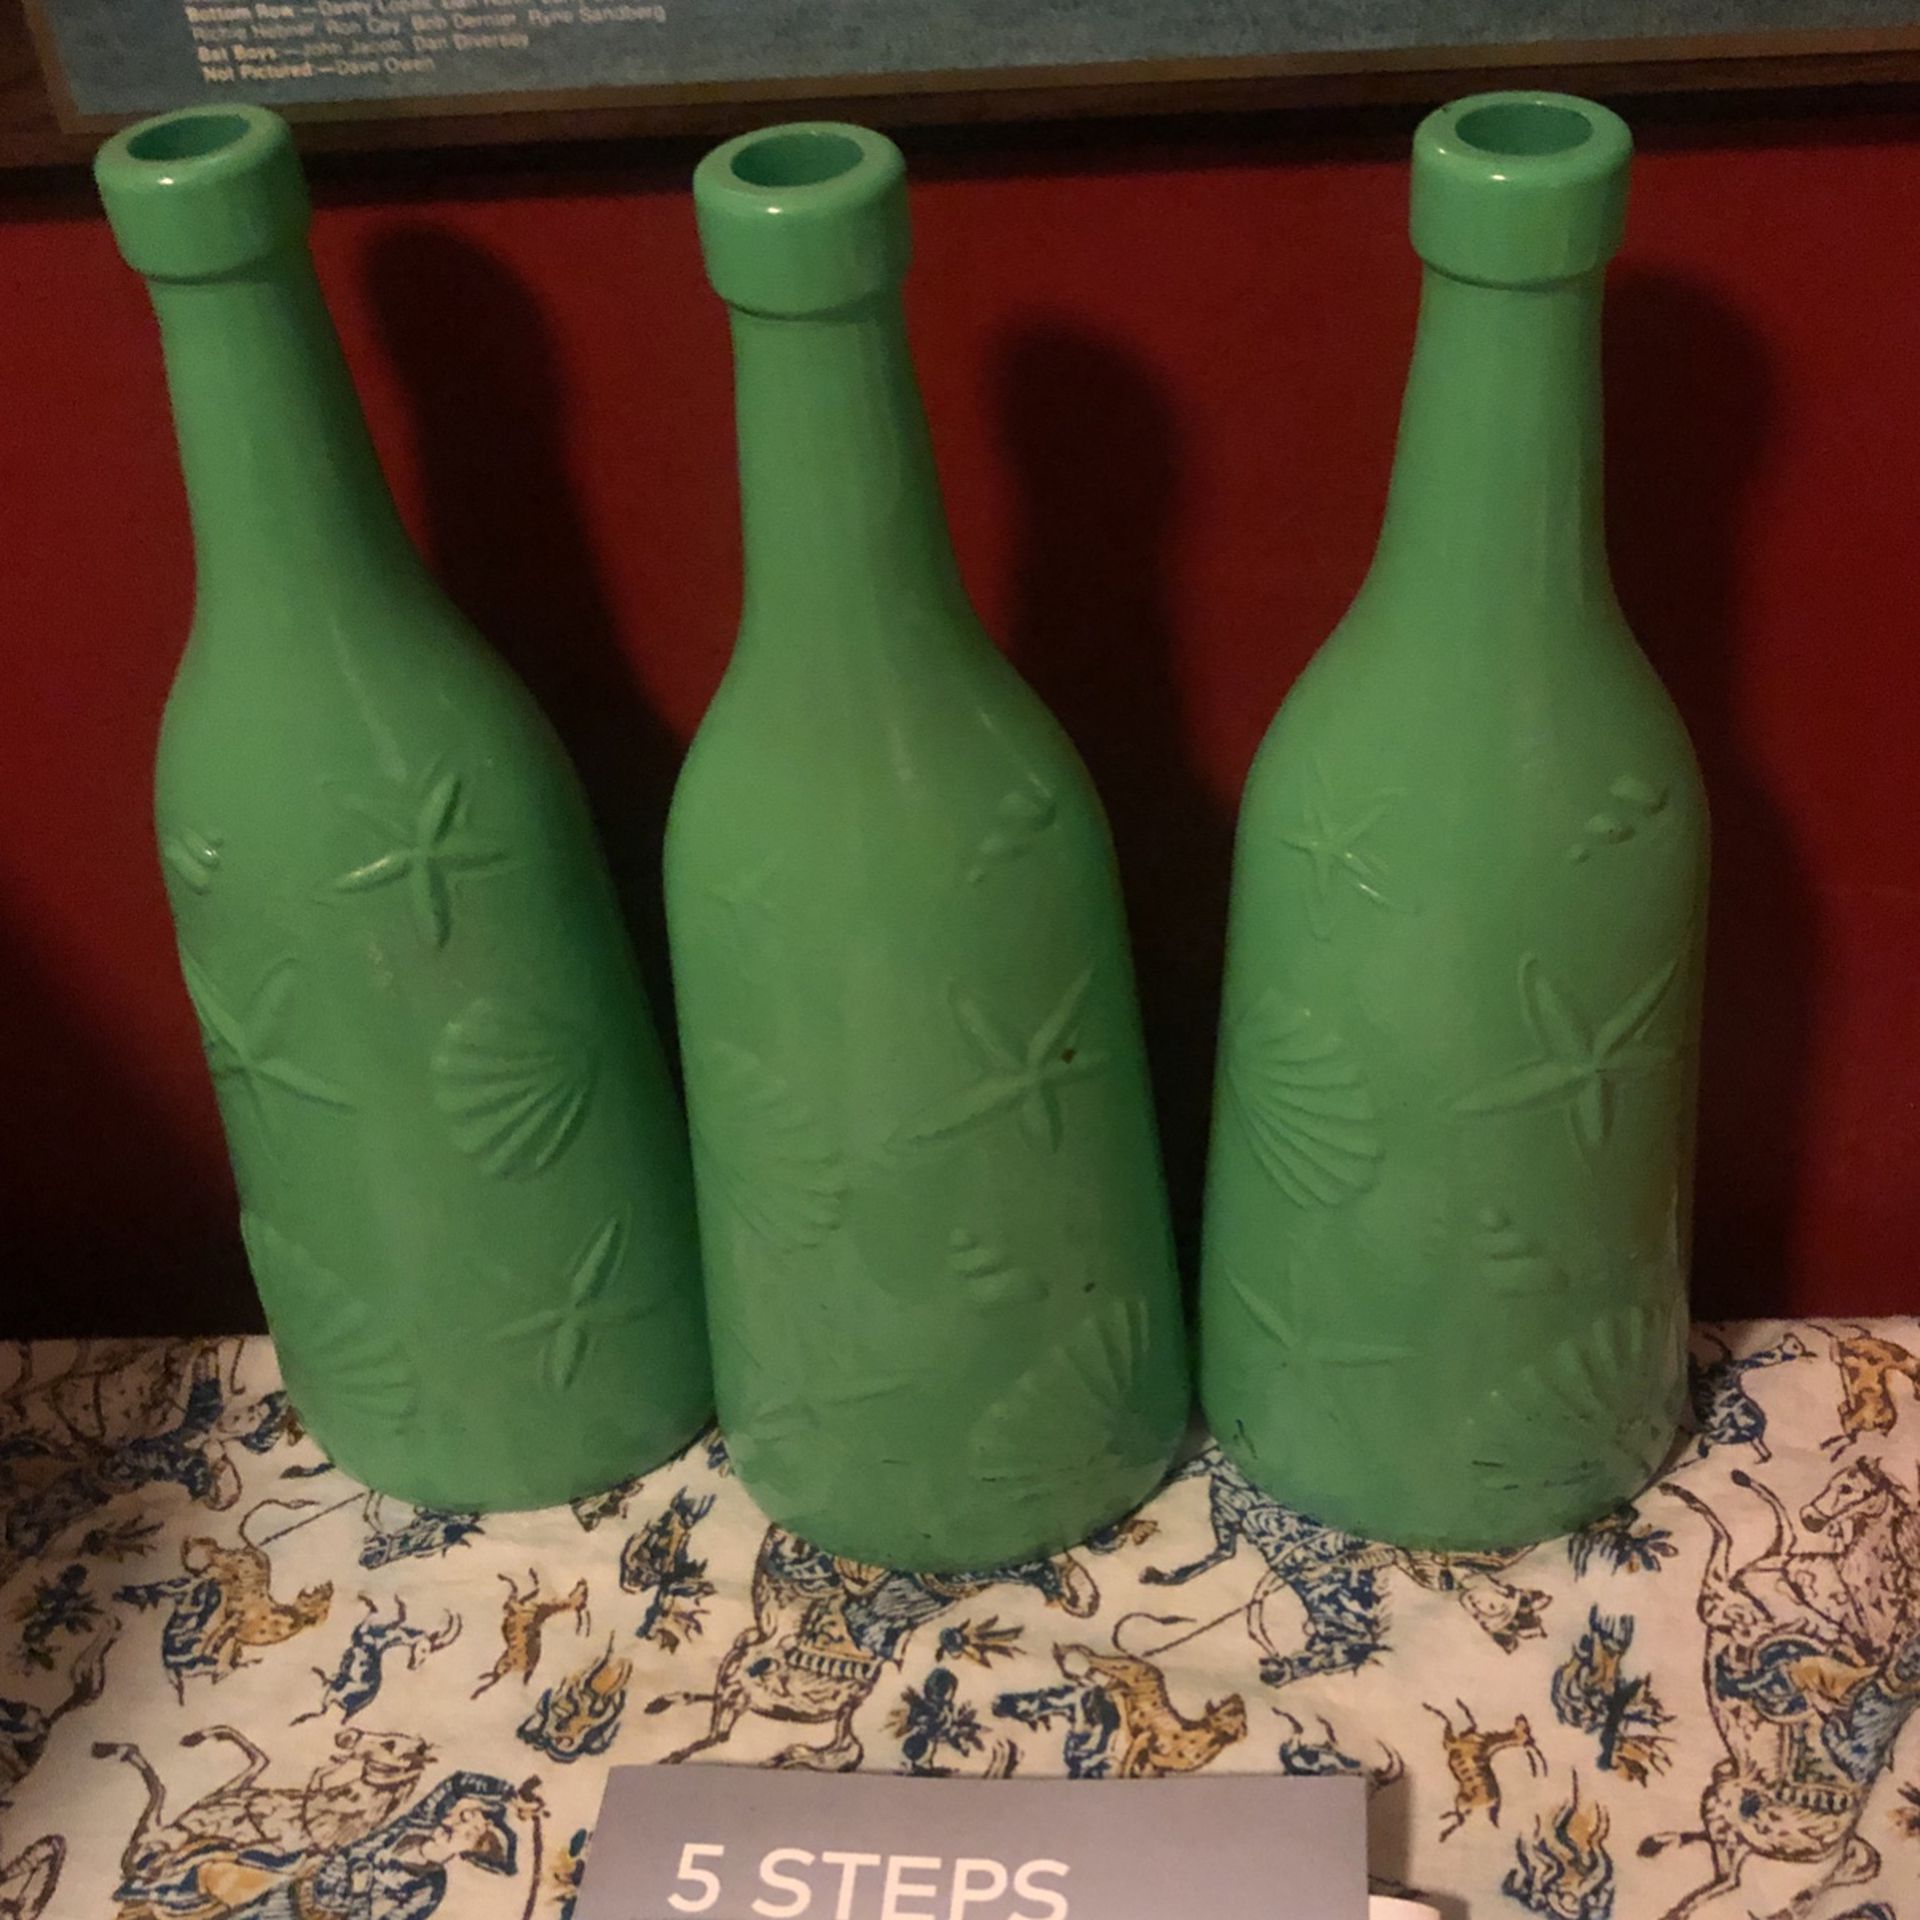 Vintage Painted Bottles From Spain 